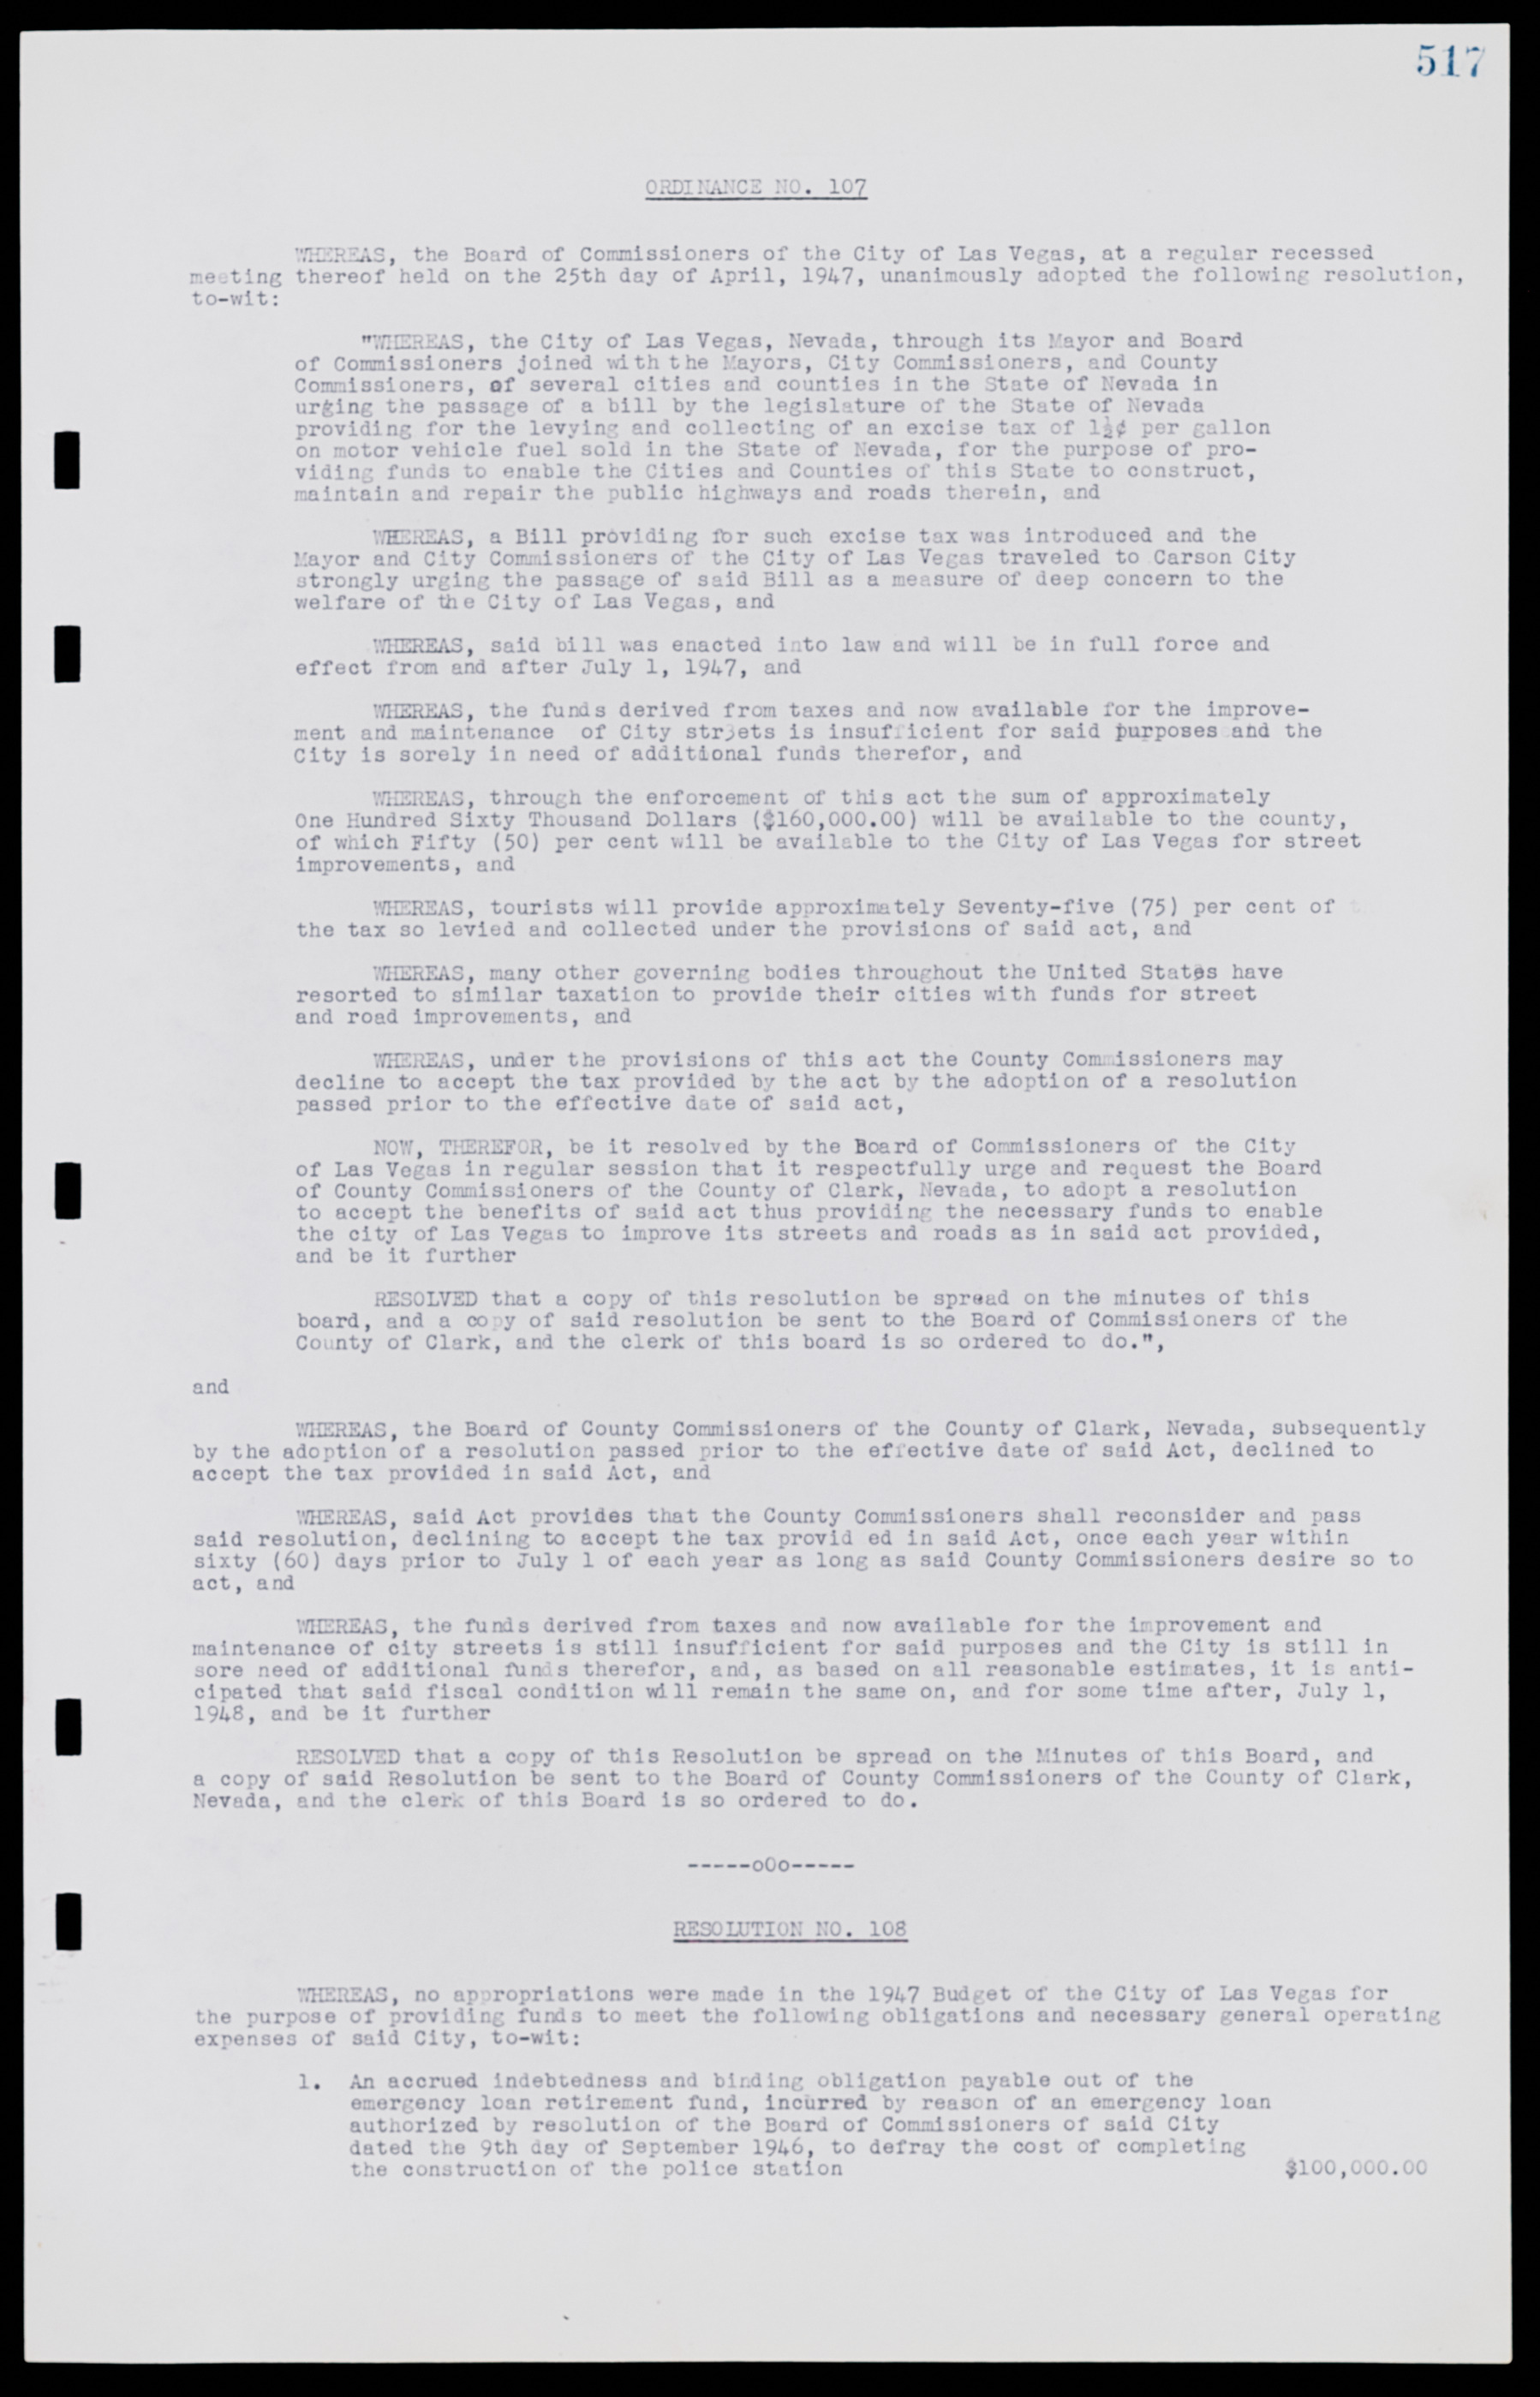 Las Vegas City Commission Minutes, January 7, 1947 to October 26, 1949, lvc000006-547